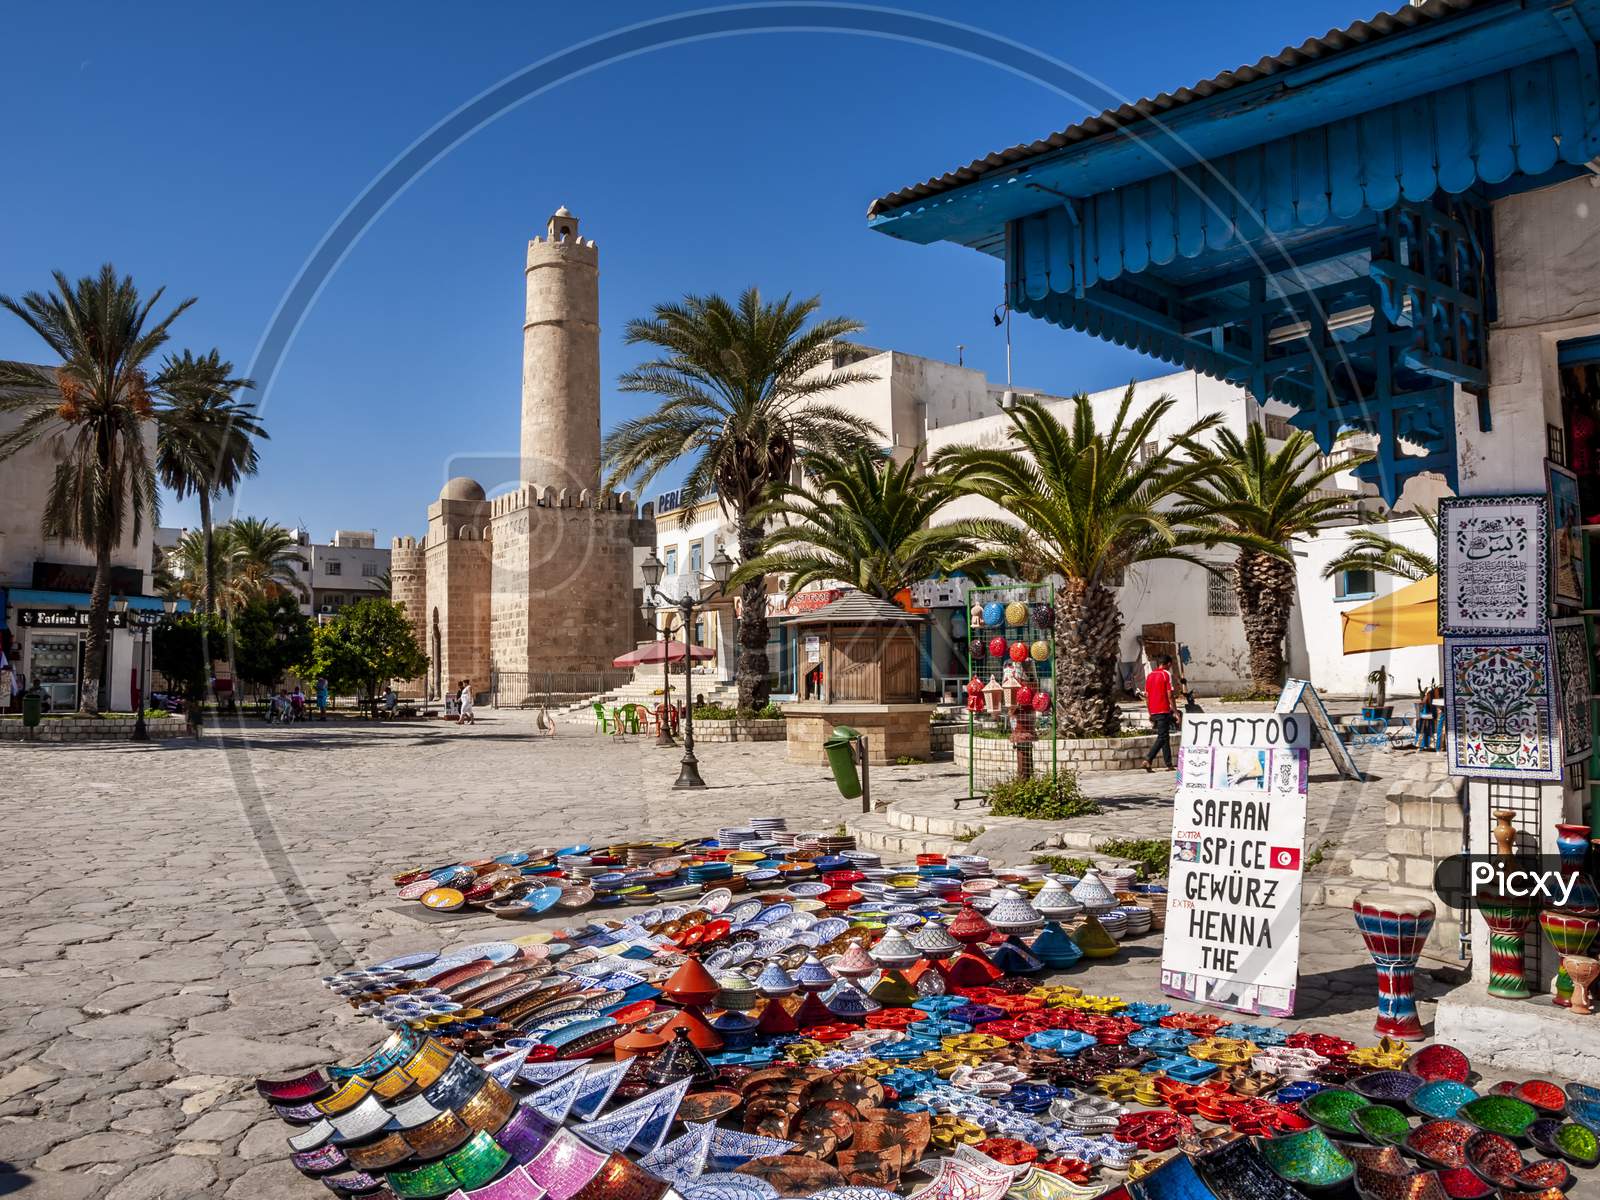 An open street market in Tunisia.